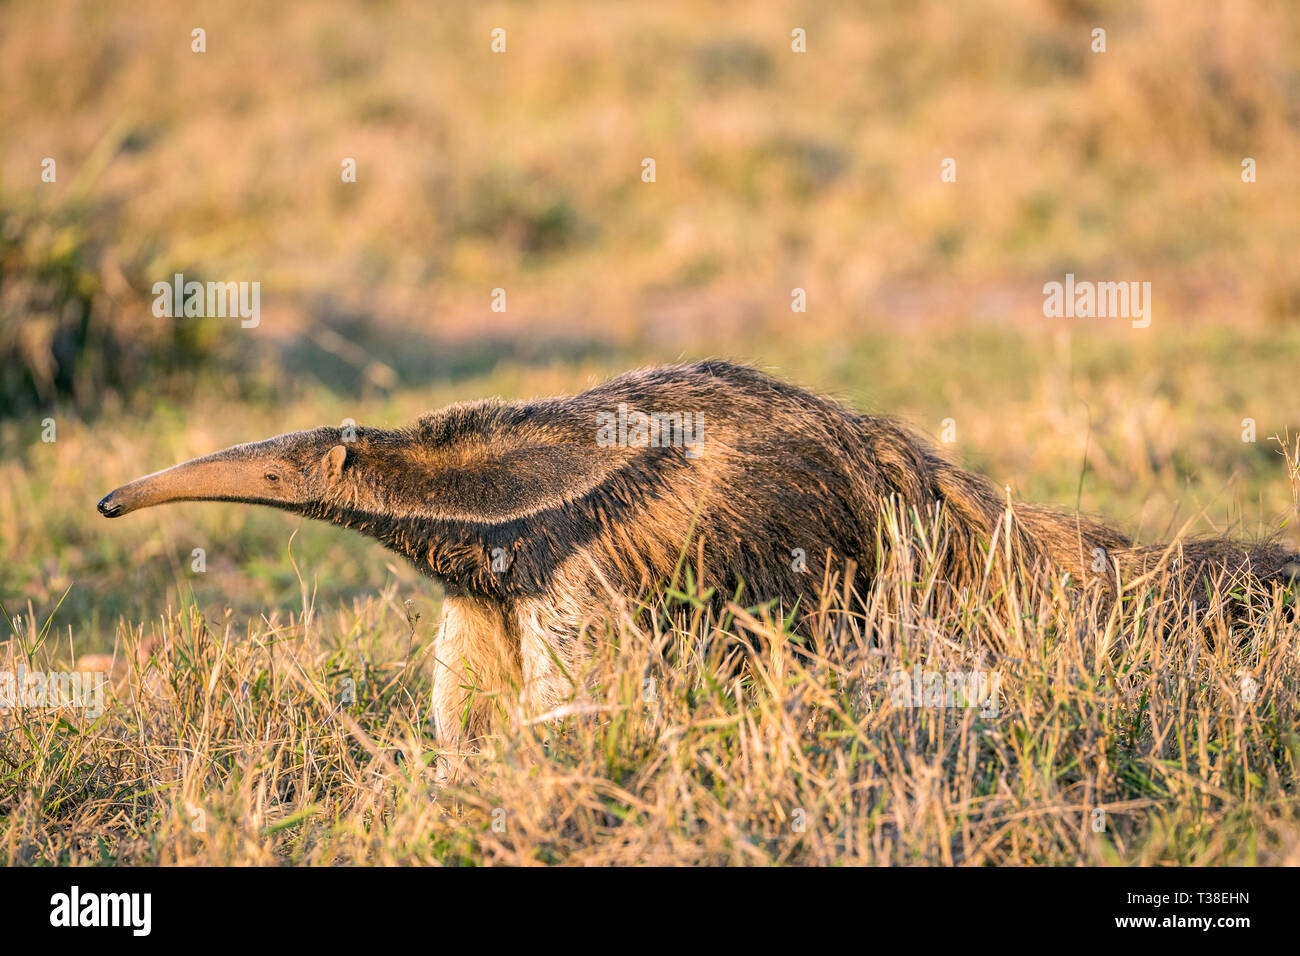 Giant Anteater, Myrmecophaga tridactyla, Bonito, Mato Grosso do Sul, Brazil Stock Photo